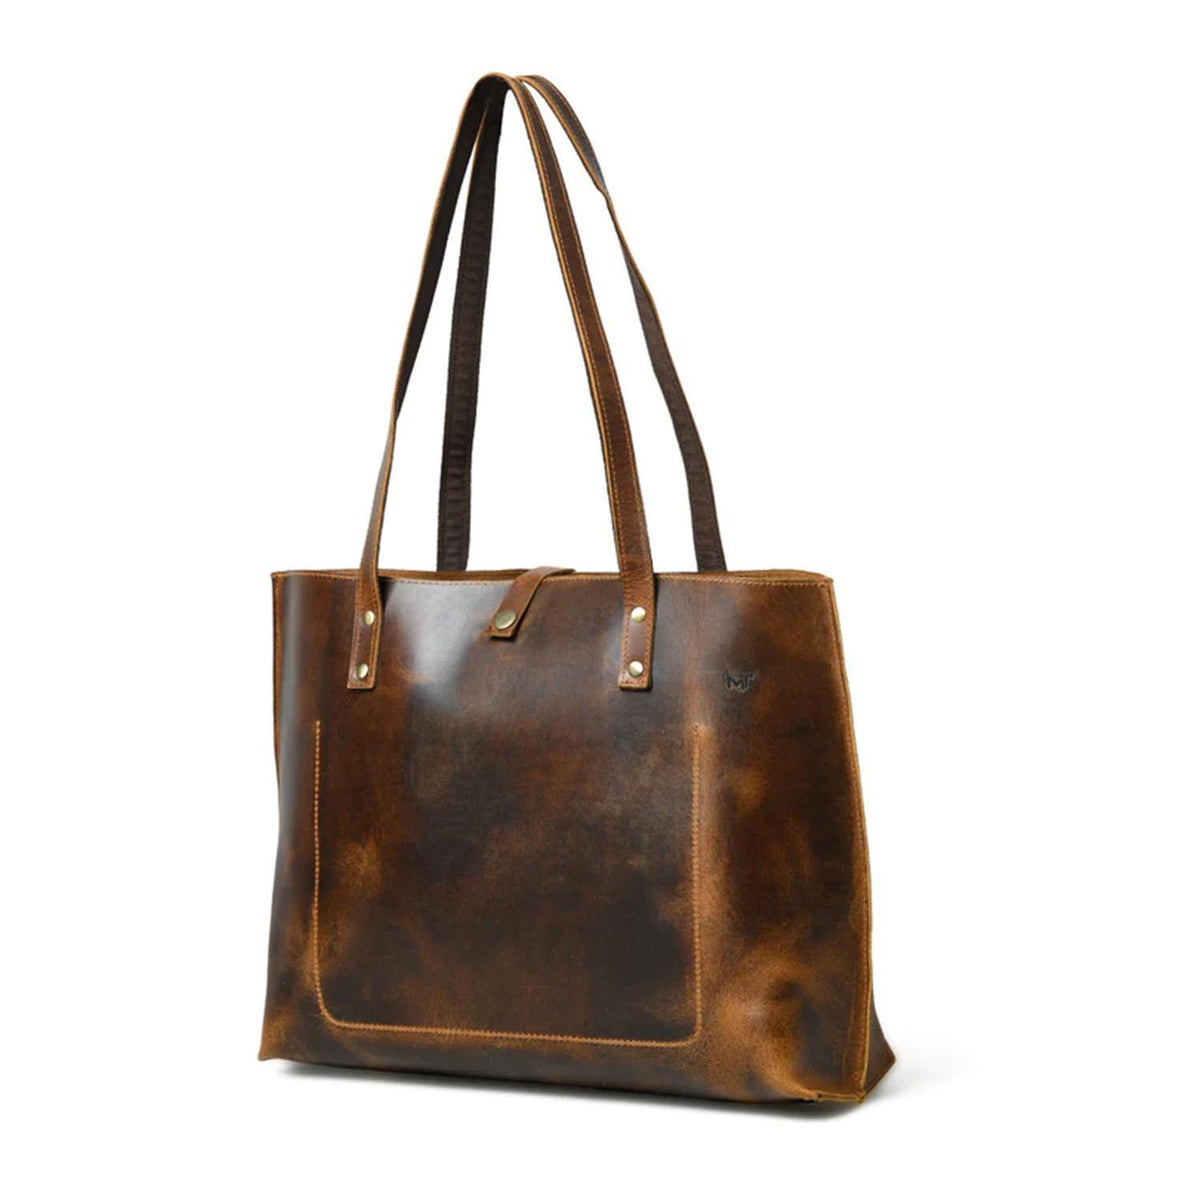 Buffalo Terry Women’s Leather Tote Bag Coffee Brown